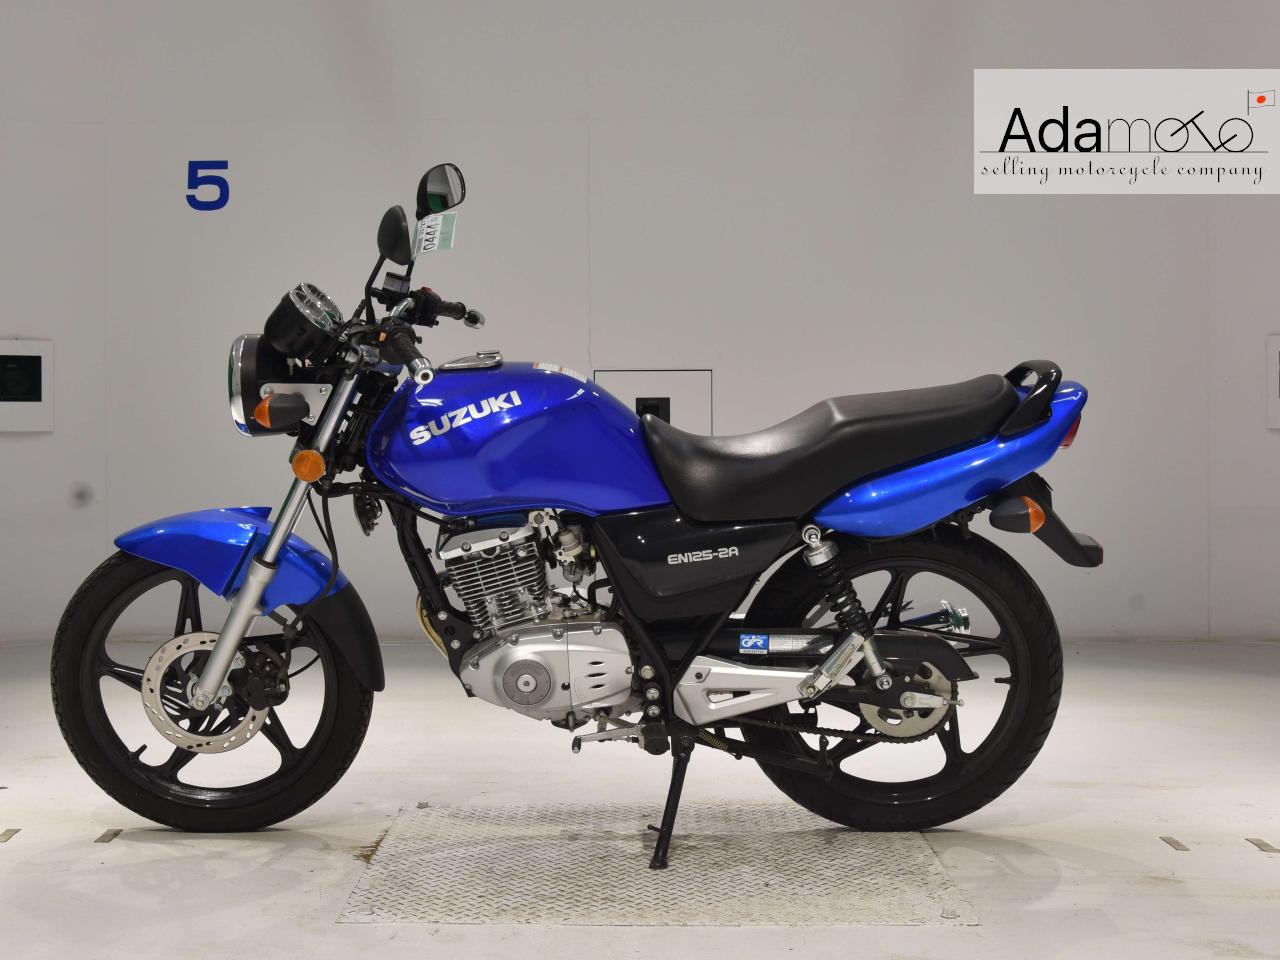 Suzuki EN125-2A - Adamoto - Motorcycles from Japan